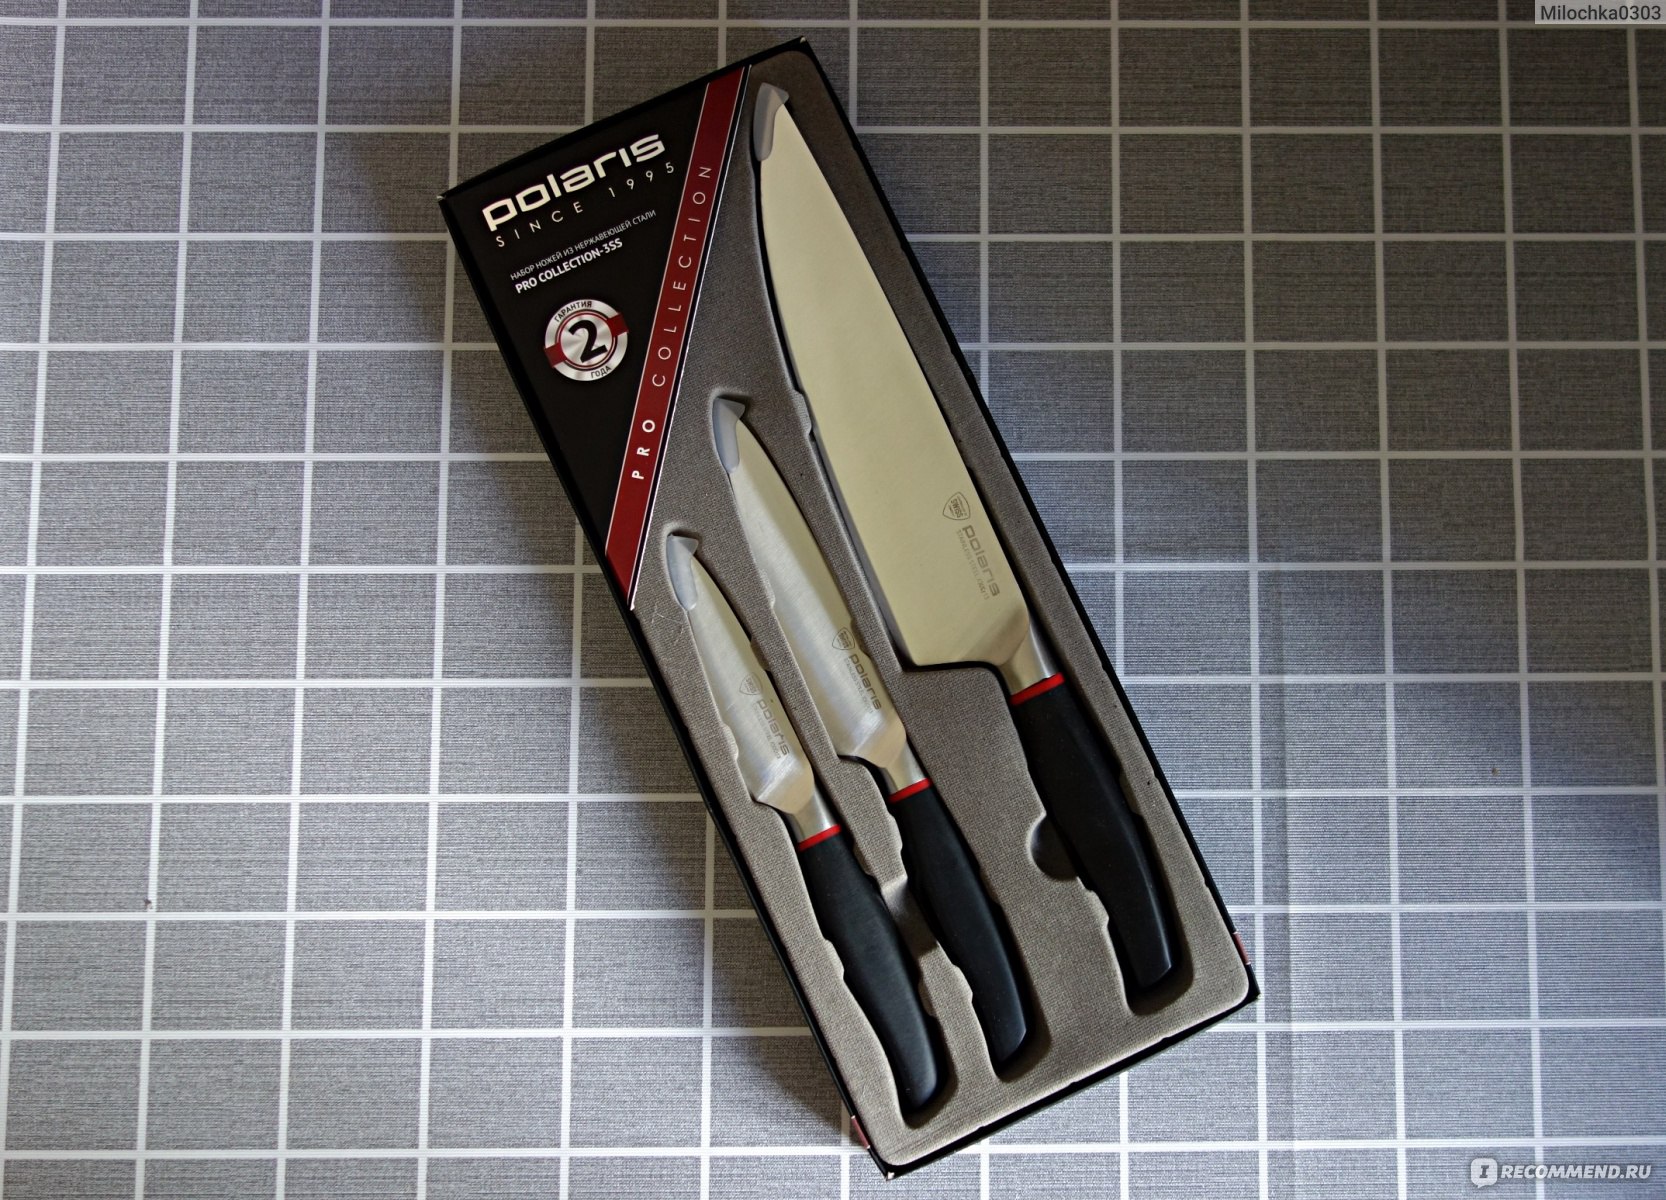 Ножи поларис купить. Набор Polaris Pro collection-3ss, 3 ножа. Набор ножей Поларис. Набор ножей Полярис. Картинки набора кухонных ножей Поларис.